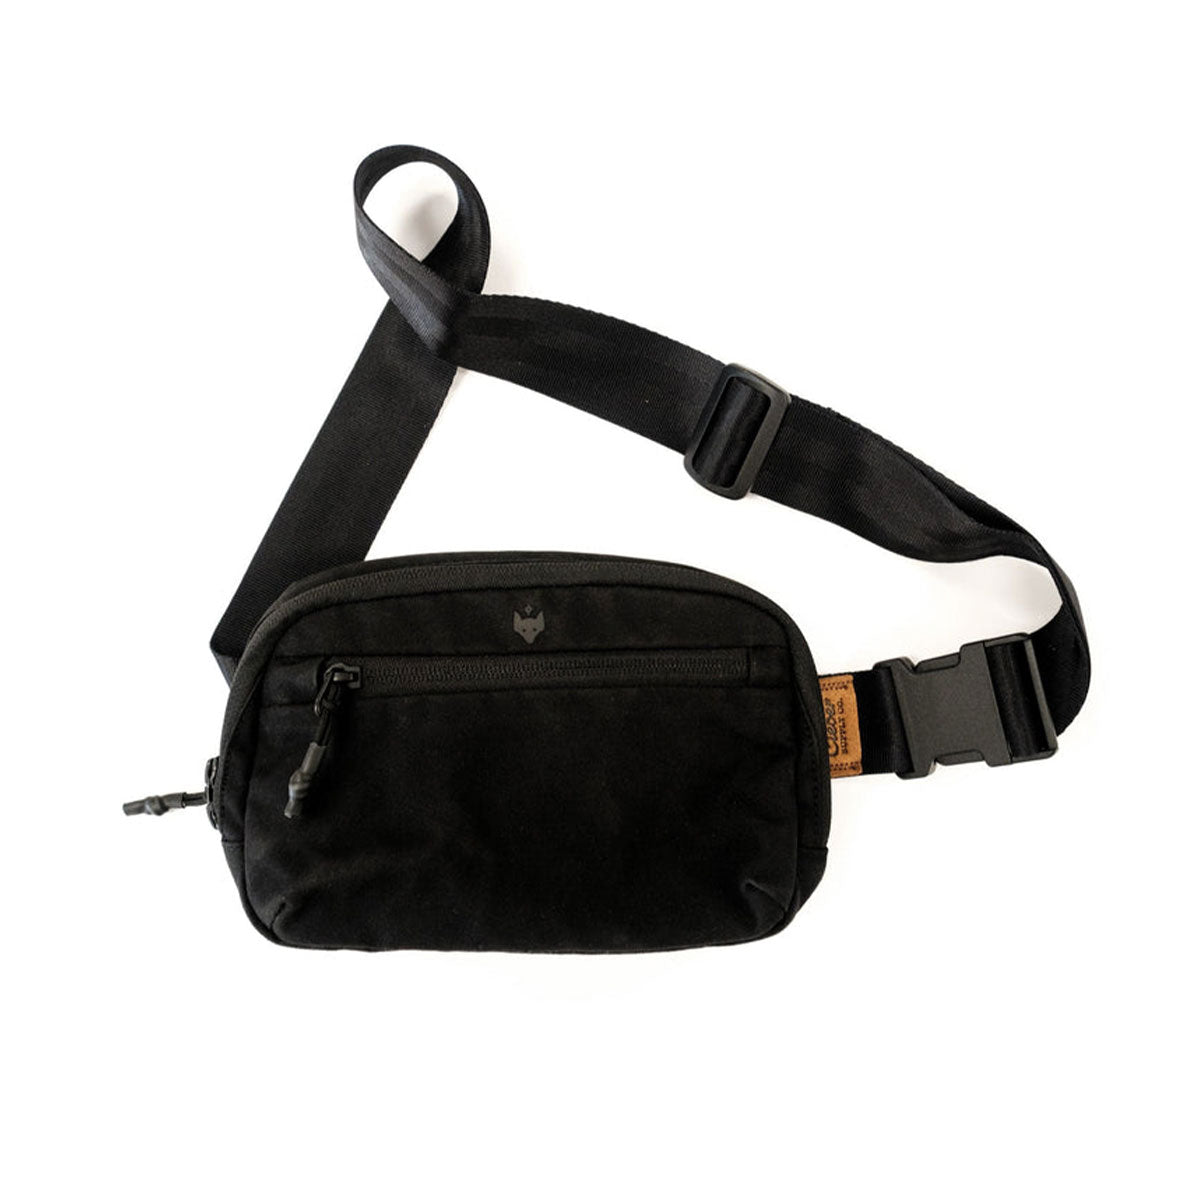 ONA The Rockaway Leather Camera Bag (Black)